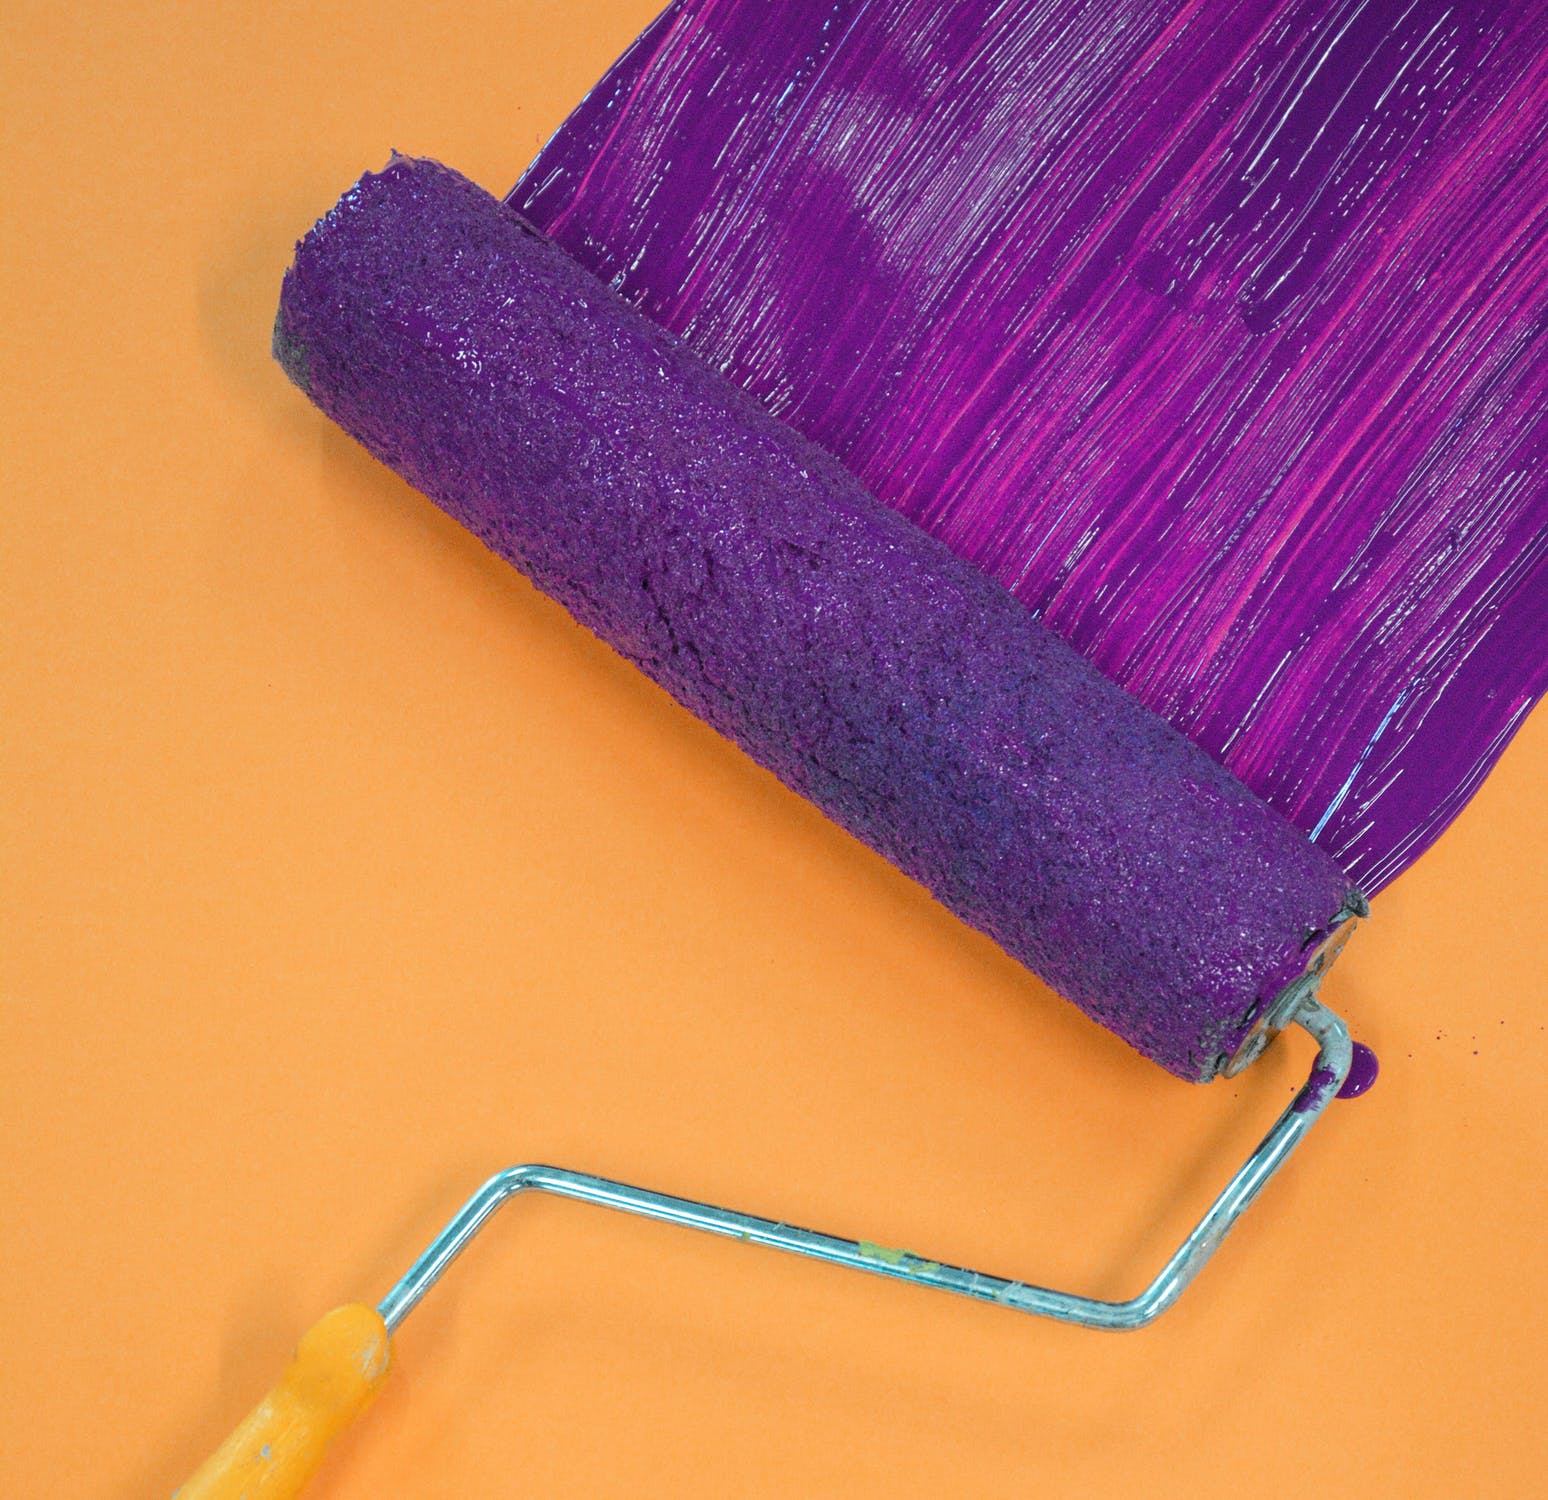 A brush painting an orange wall purple.